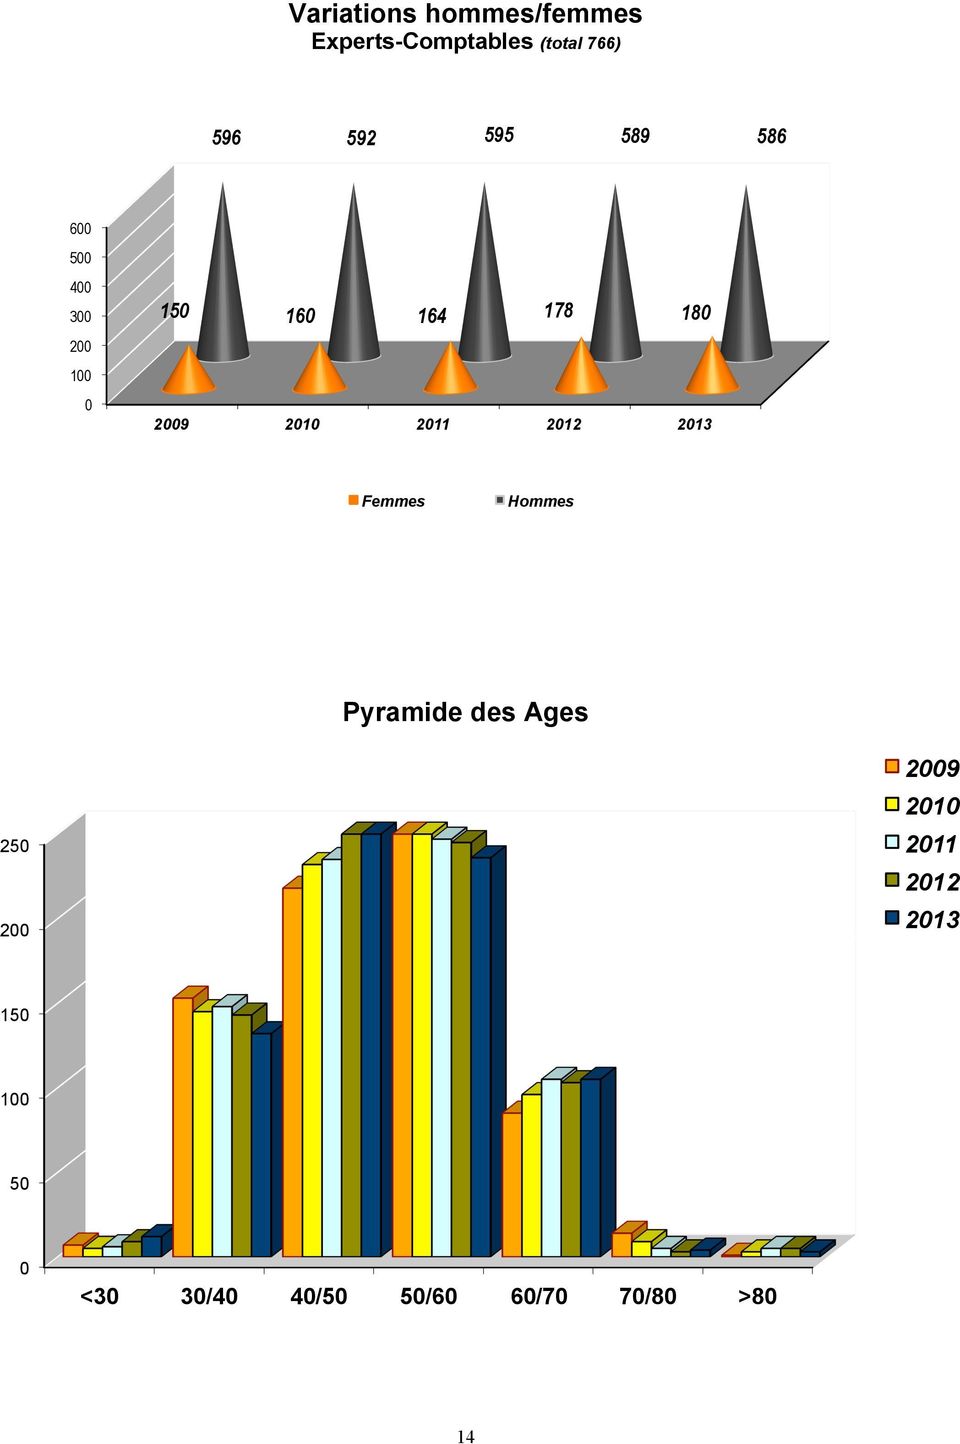 2011 2012 2013 Femmes Hmmes Pyramide des Ages 250 200 2009 2010